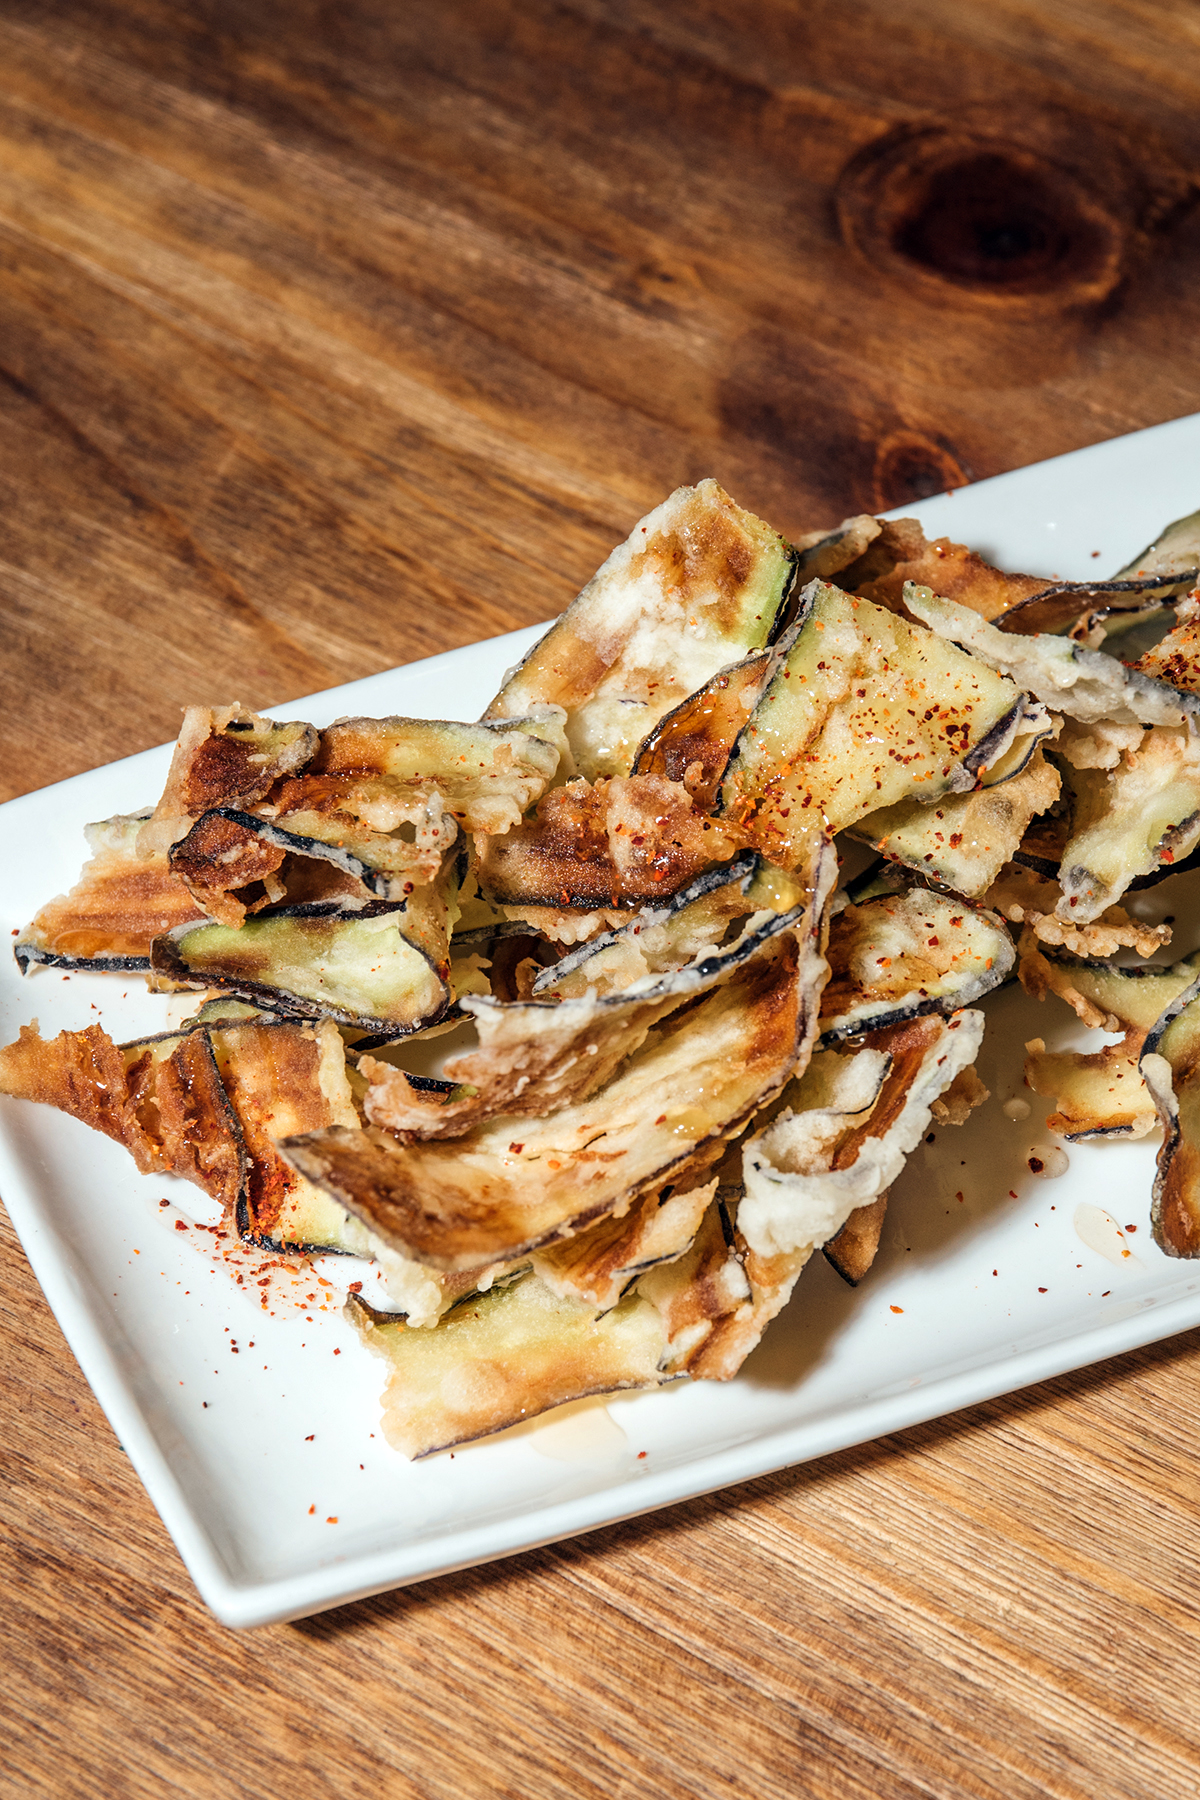 Bar Pintxos' berenjenas fritas (fried eggplant, espelette, honey)